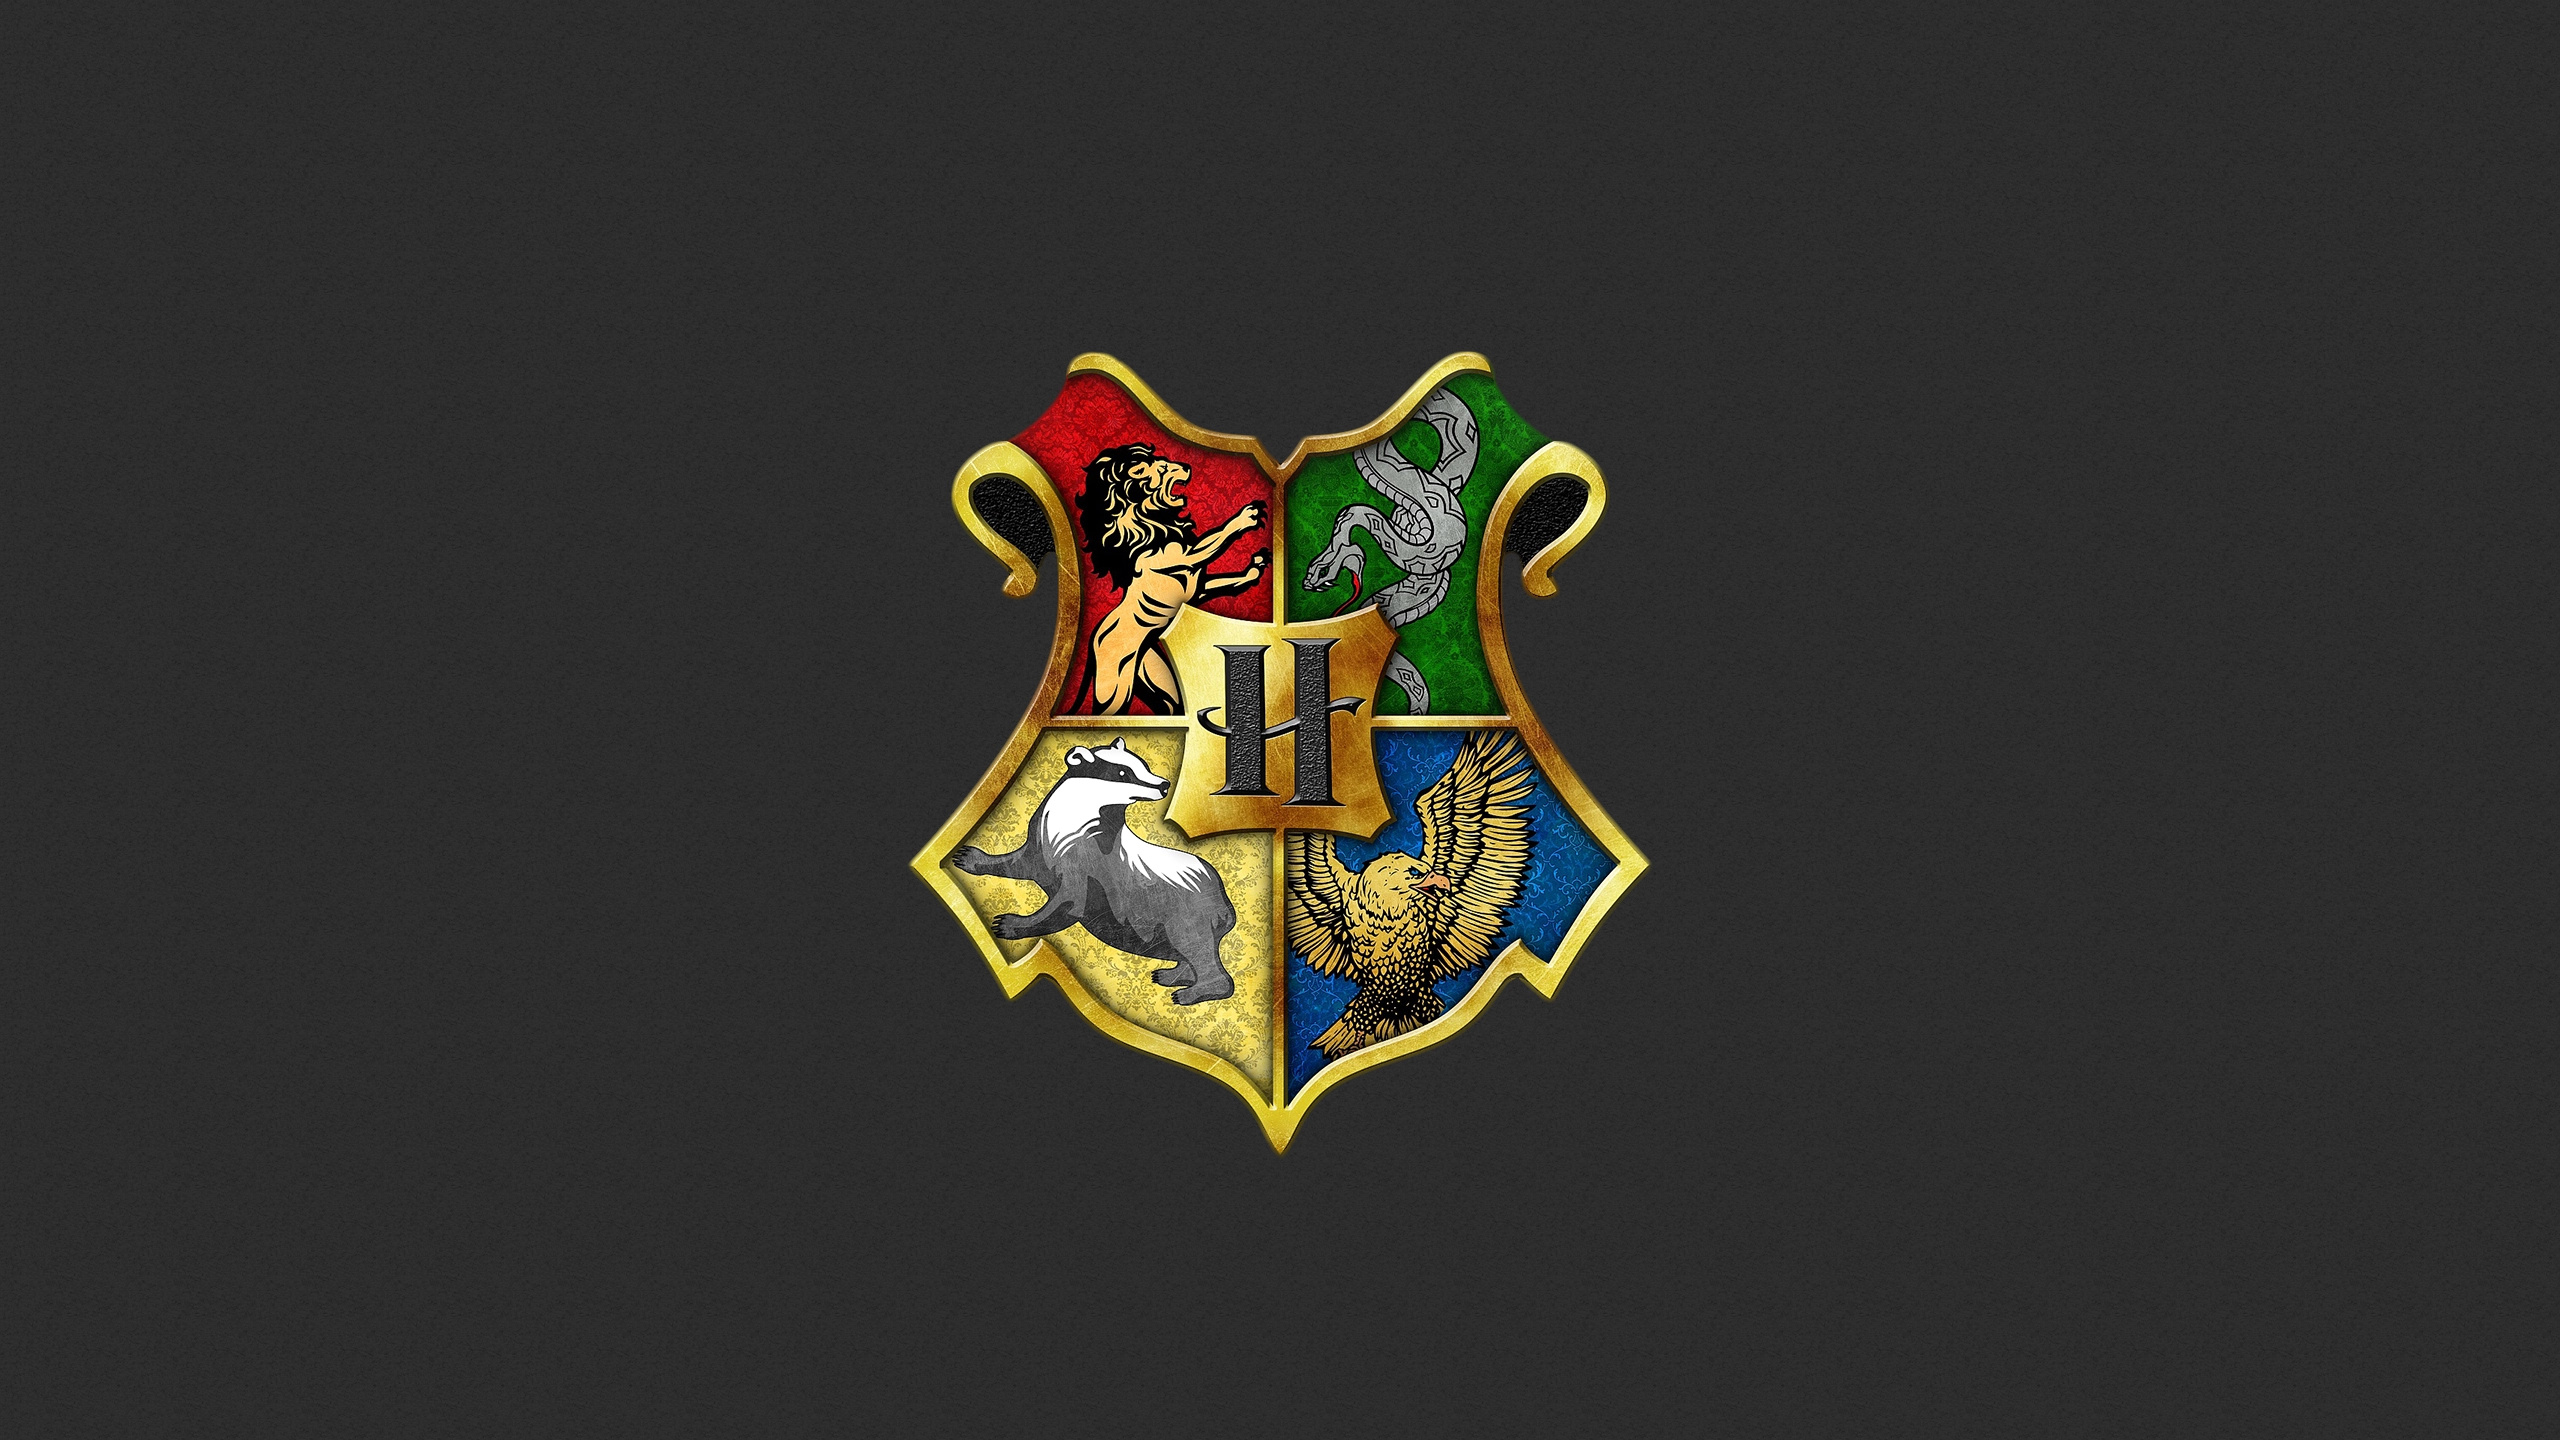 HD wallpaper, 2560X1440 Hd Desktop, Ravenclaw, House Badges, Slytherin, Desktop Hd Hogwarts Crest Wallpaper, Hufflepuff, Wallpaper, Gryffindor